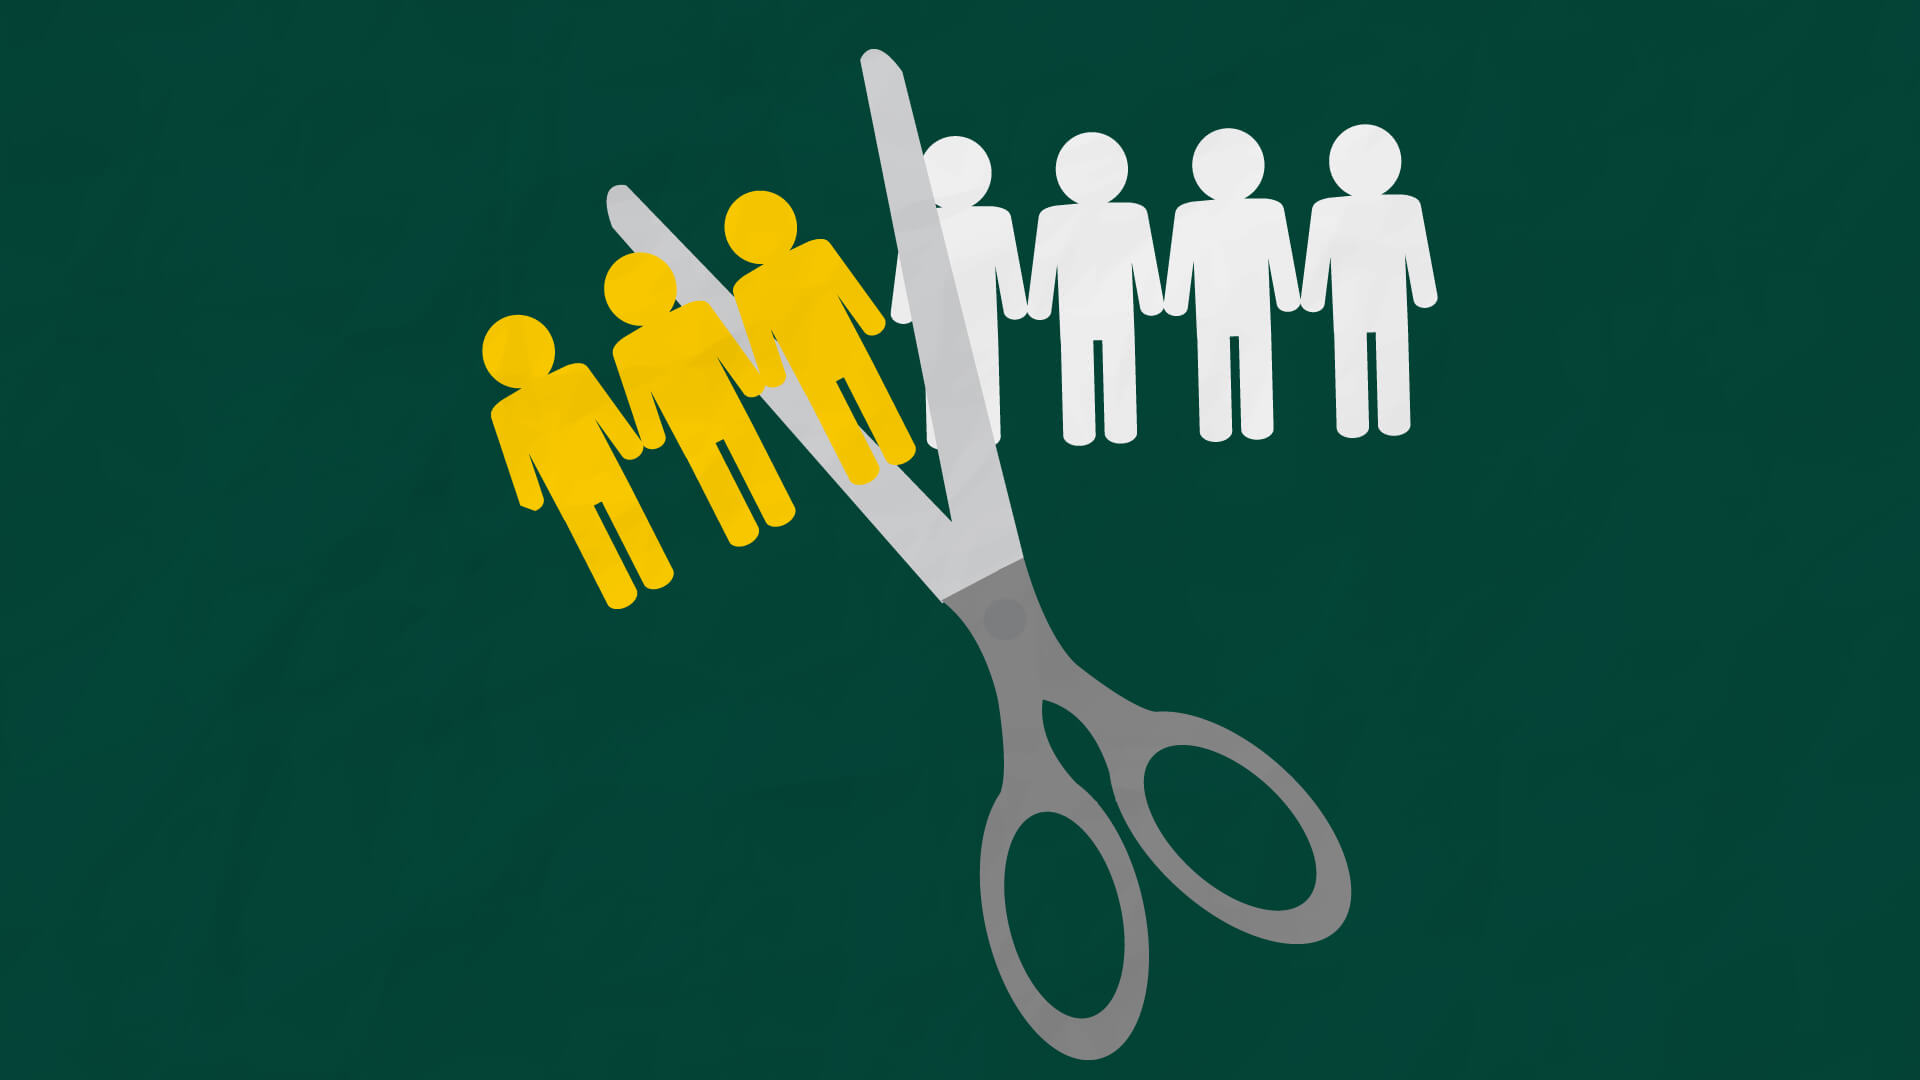 Illustration of scissors cutting paper workforce in half.